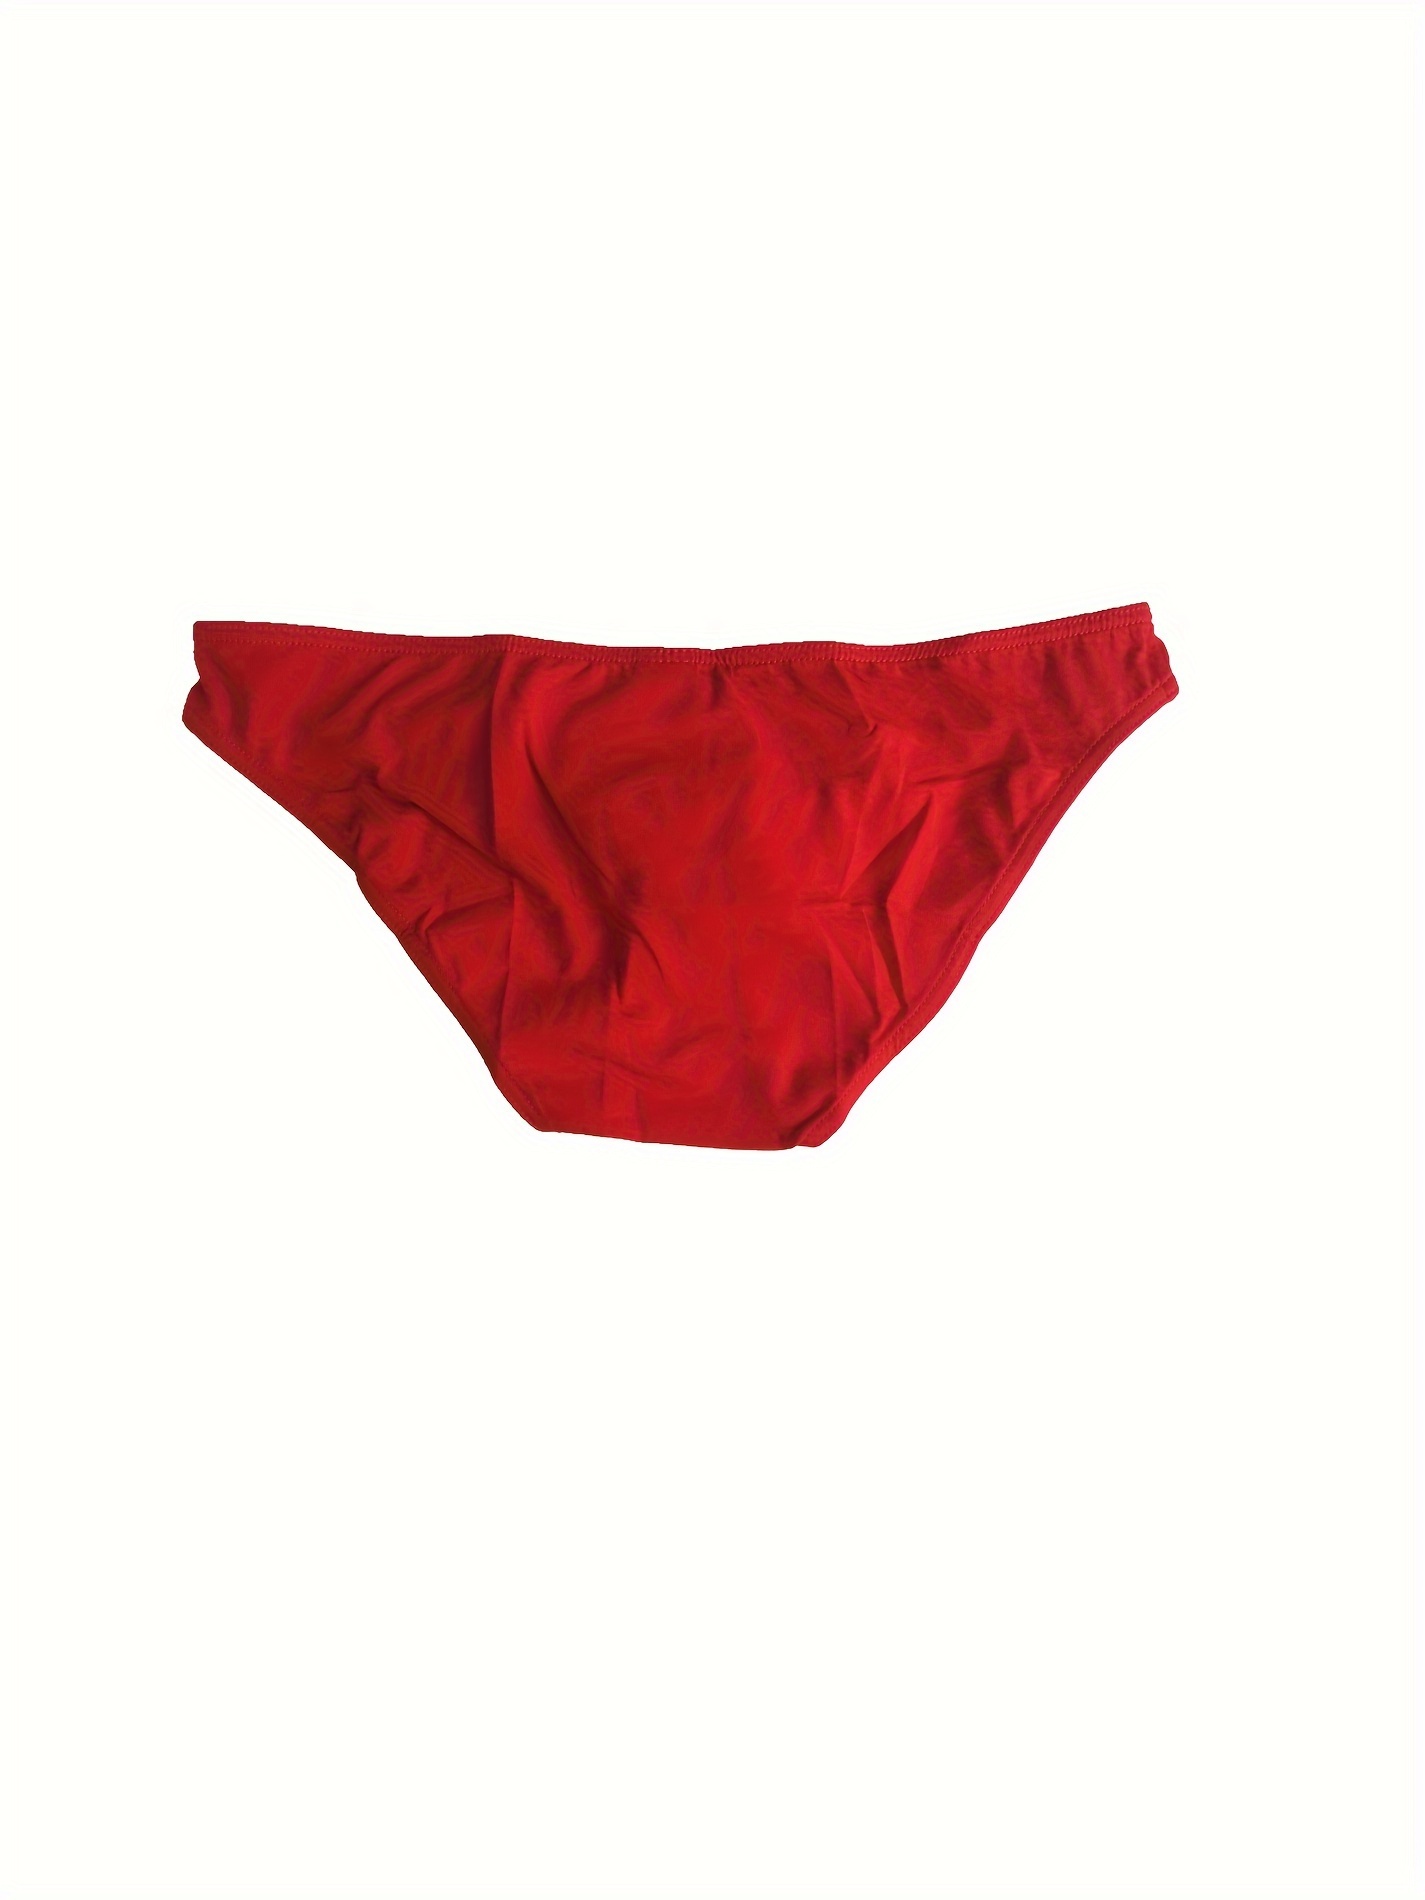 Set of 6 Multicolour Panty/undergarments/underwear for Women 